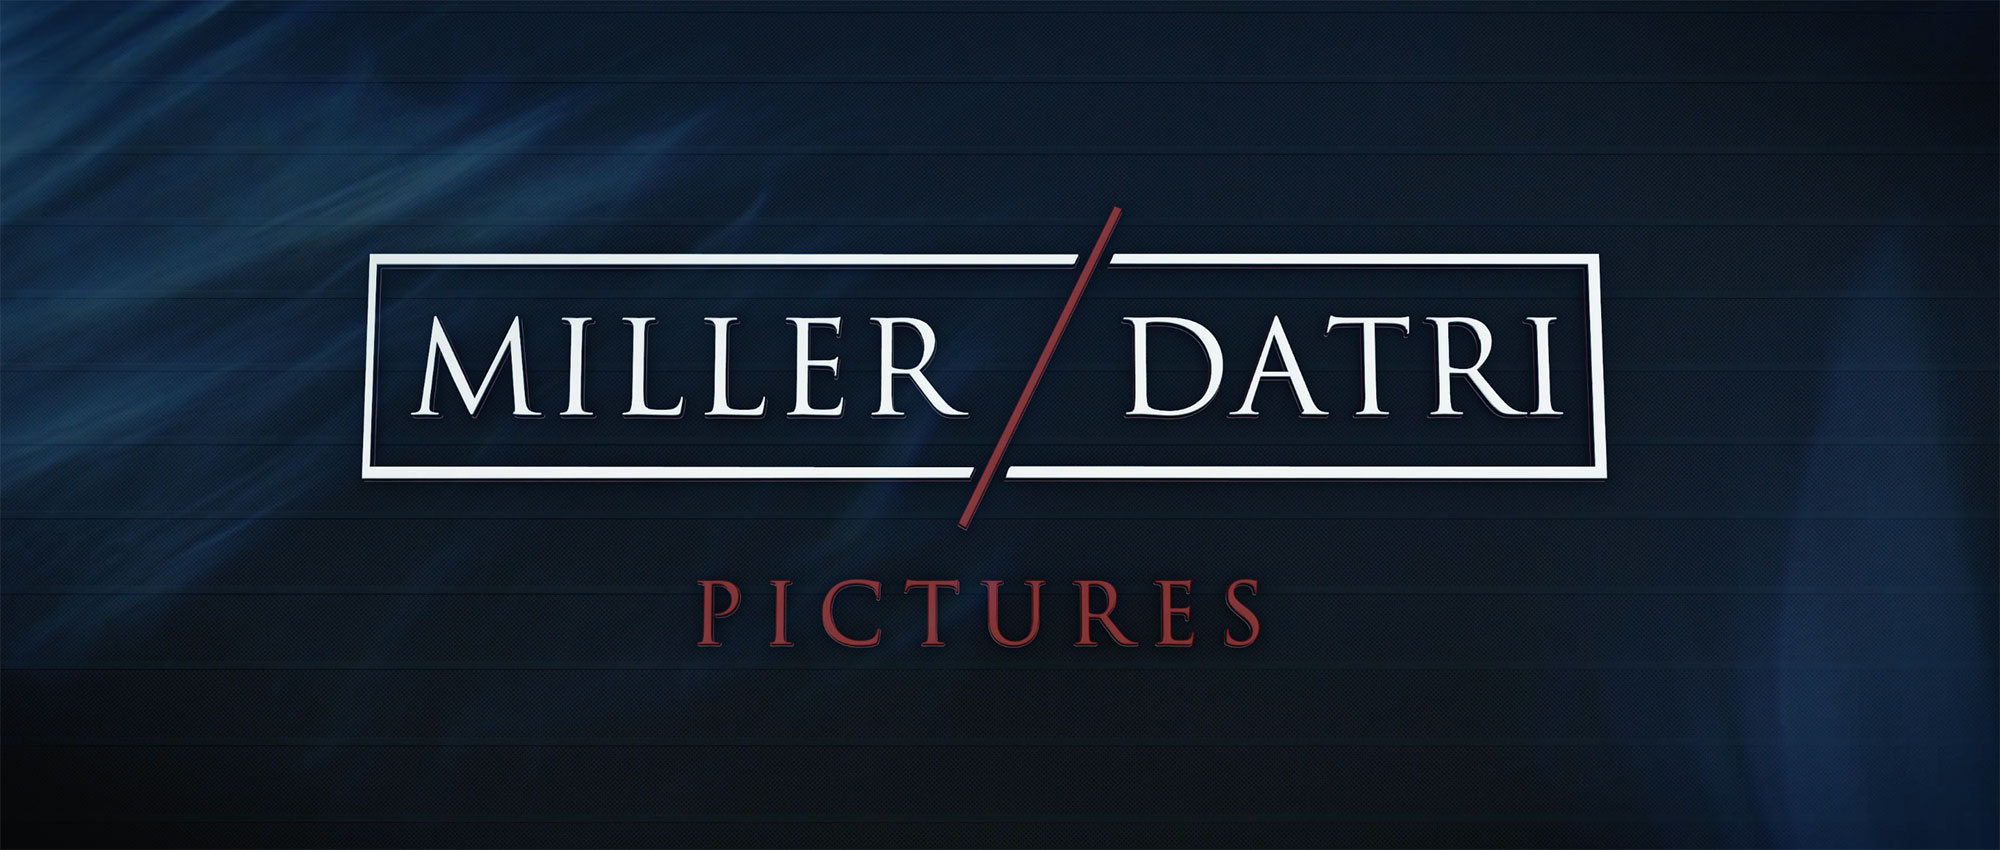 Miller/Datri Pictures Movie Studio